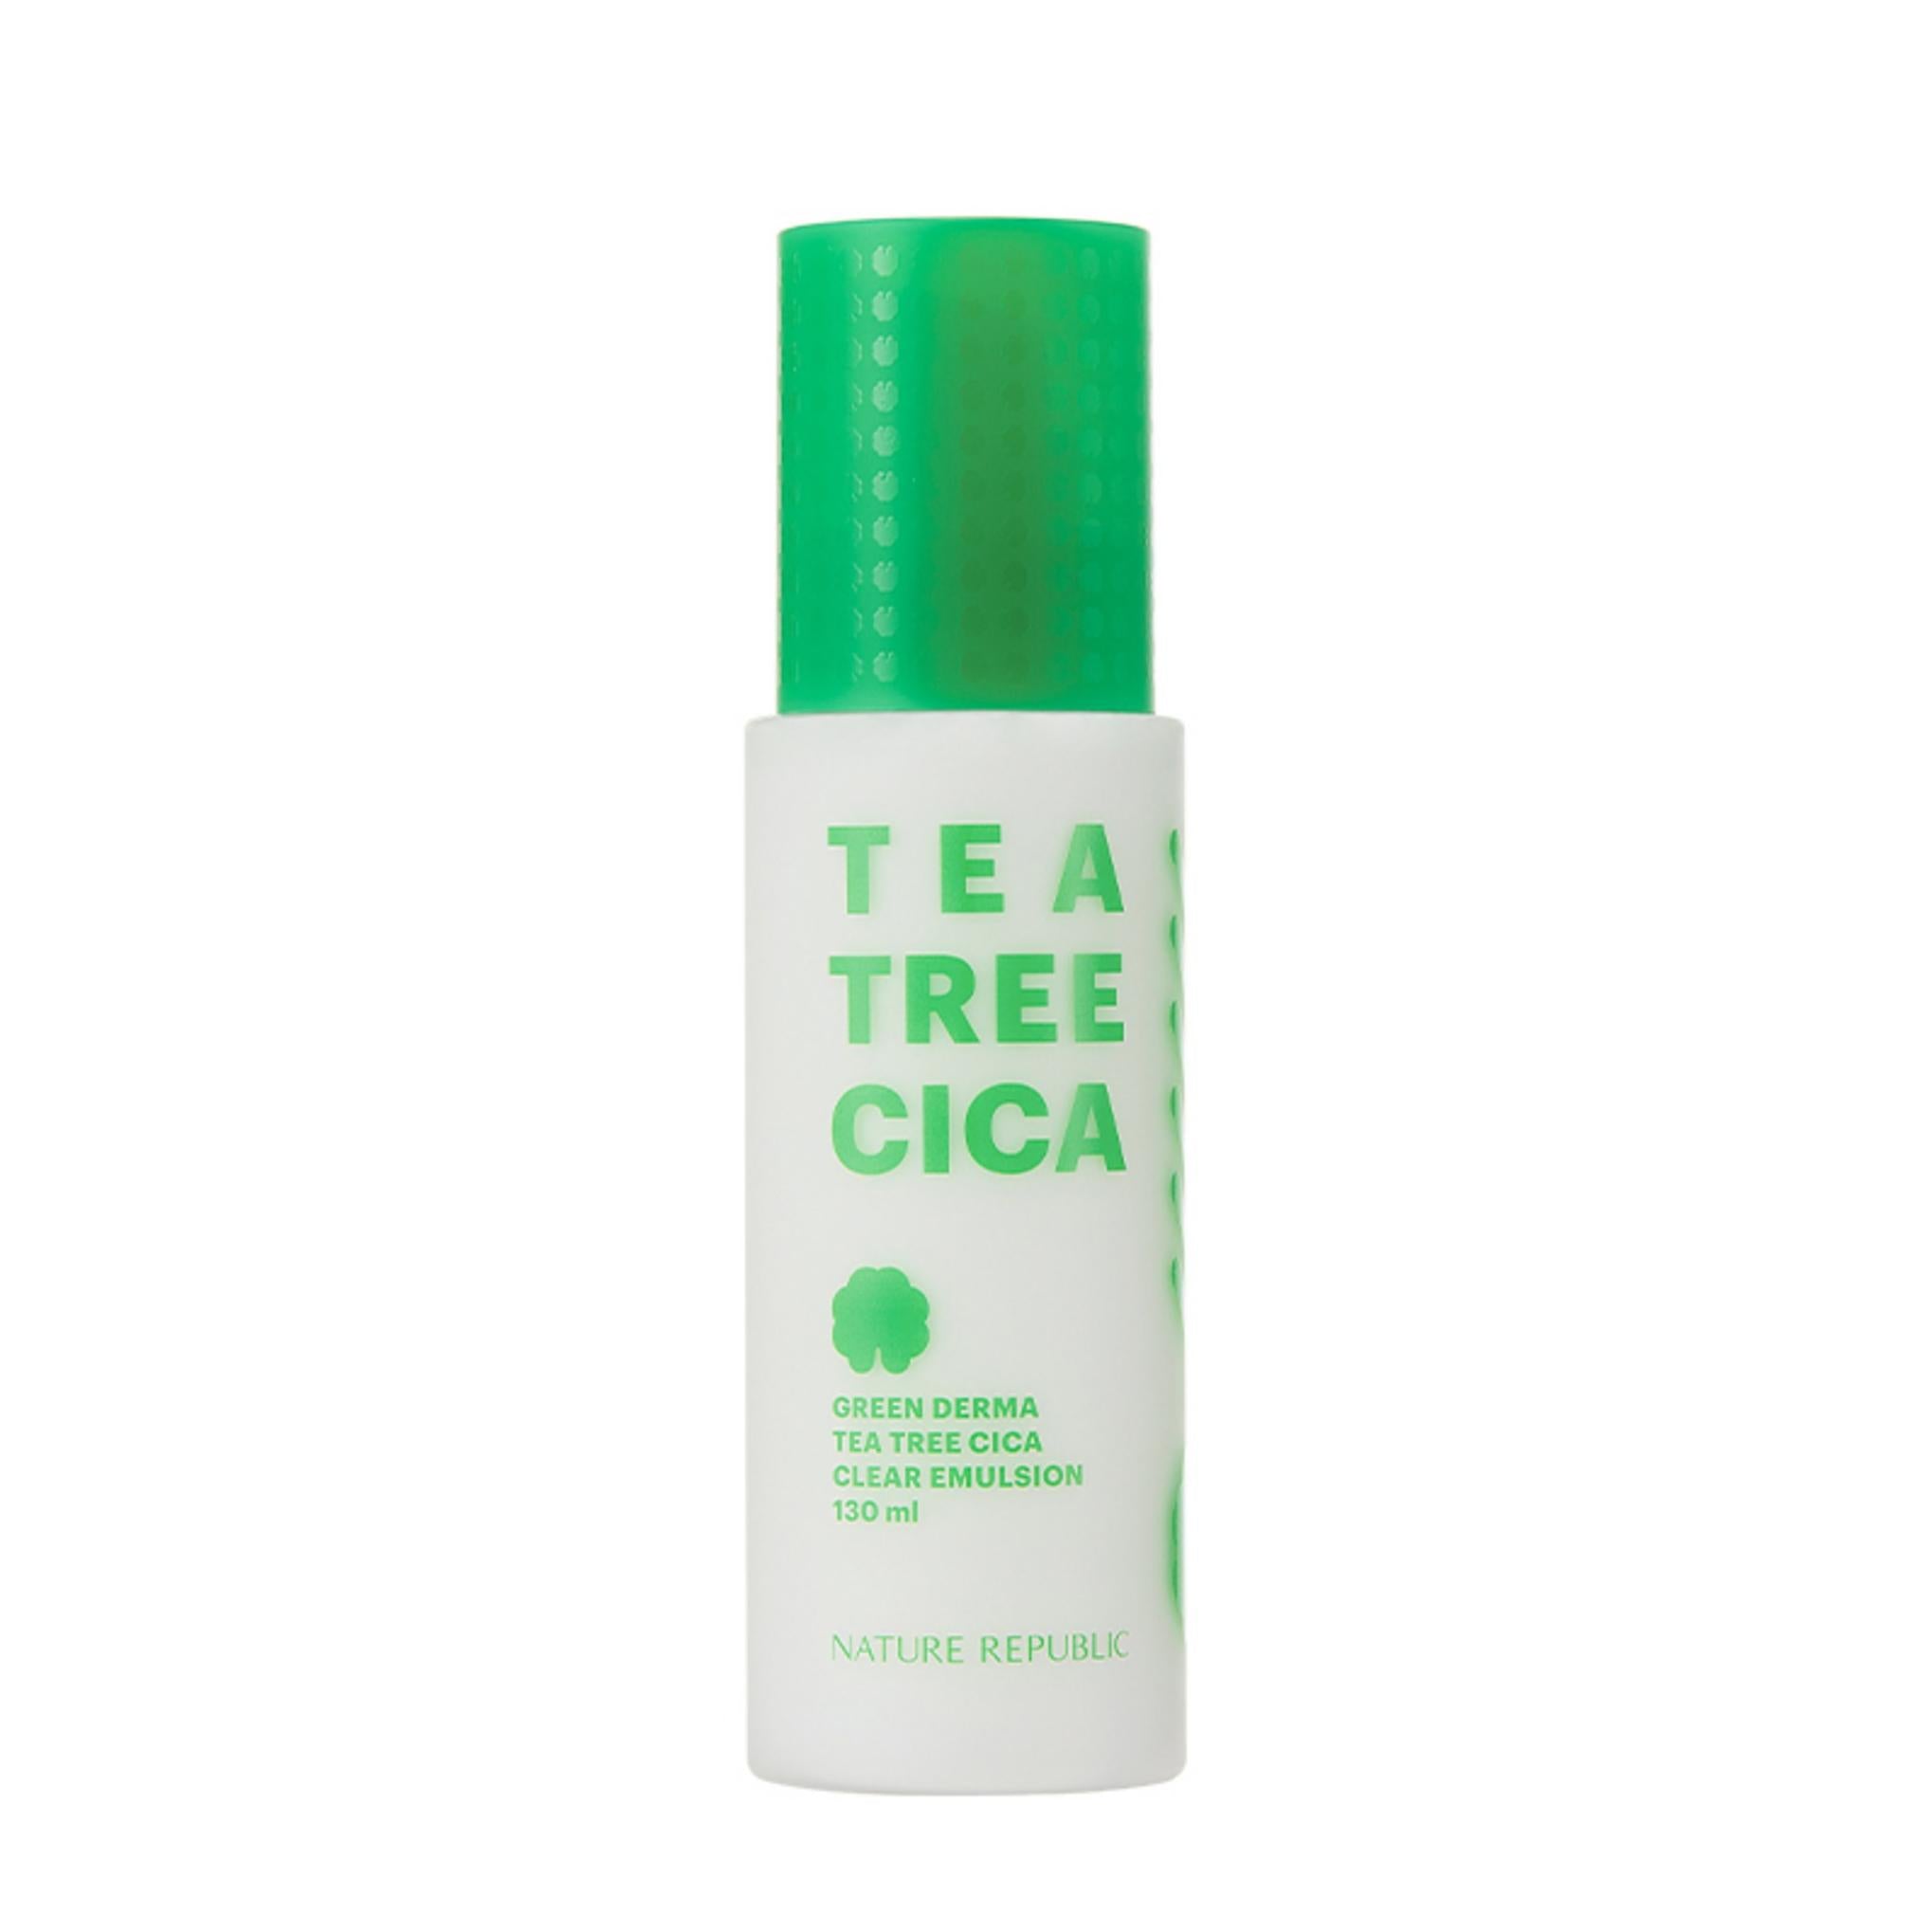 Nature Republic Green Derma Tea Tree Cica Clear Emulsion